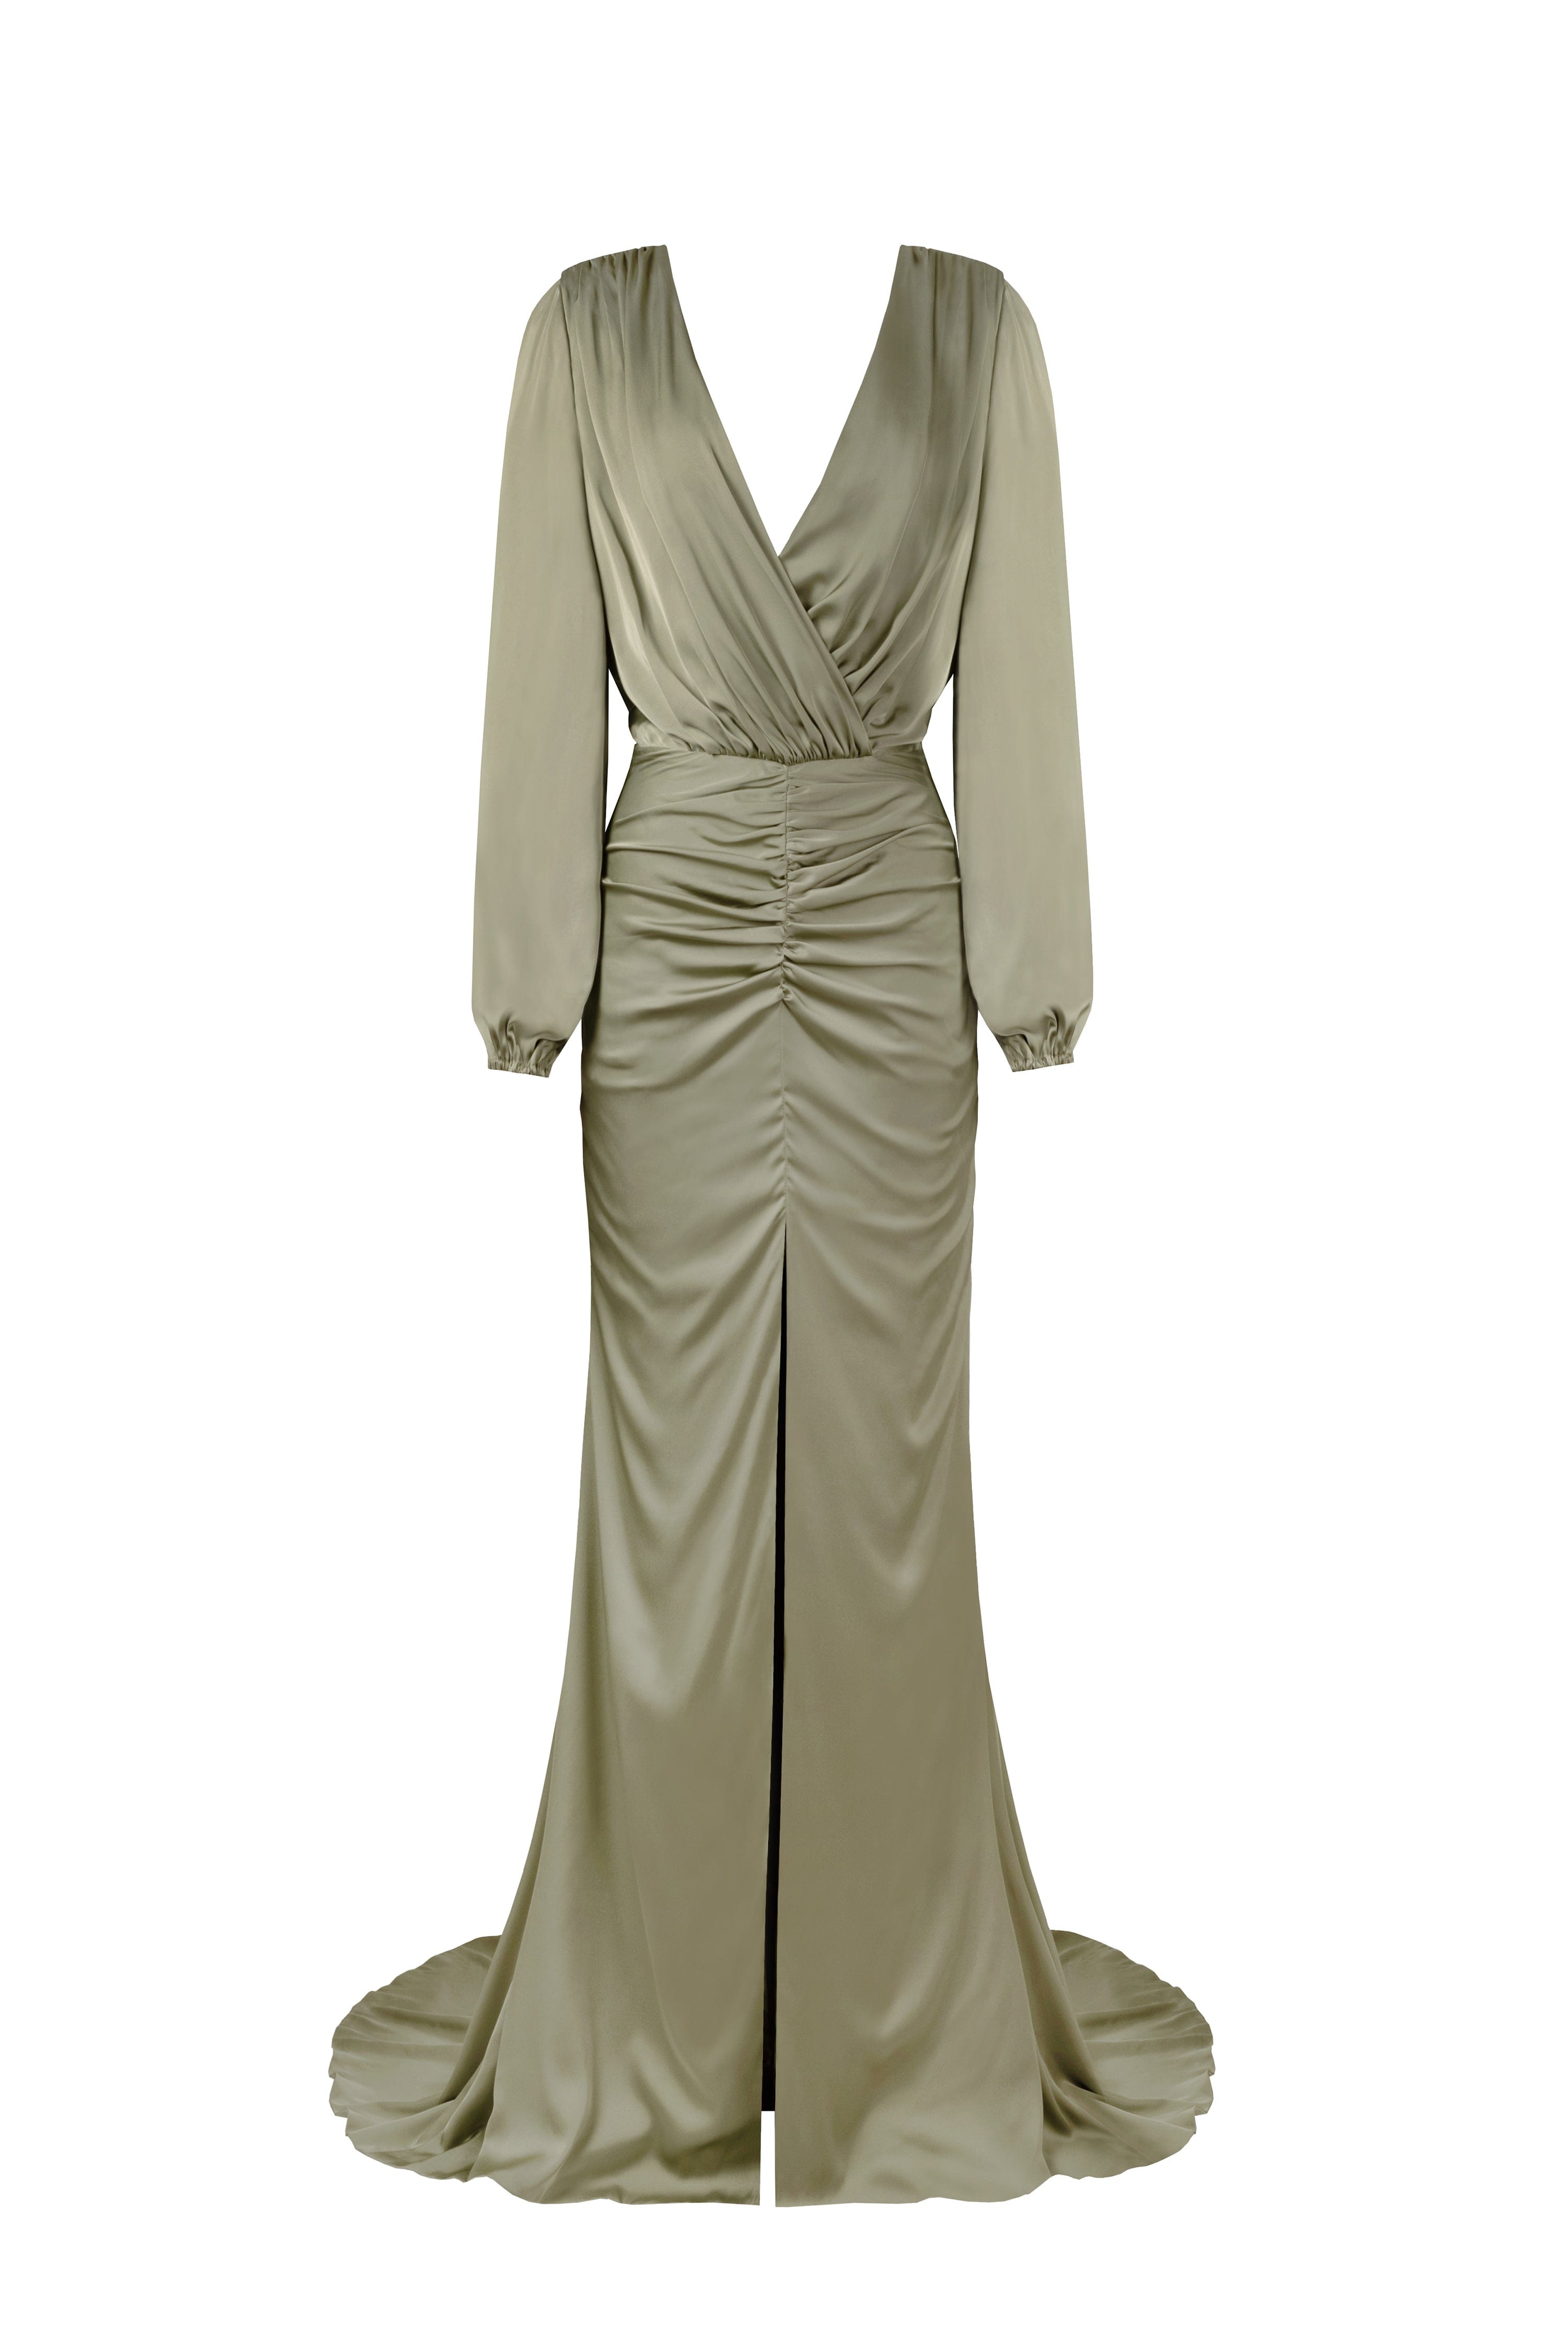 Buy Lily White Silk Dresses Online for Women | Rimmba